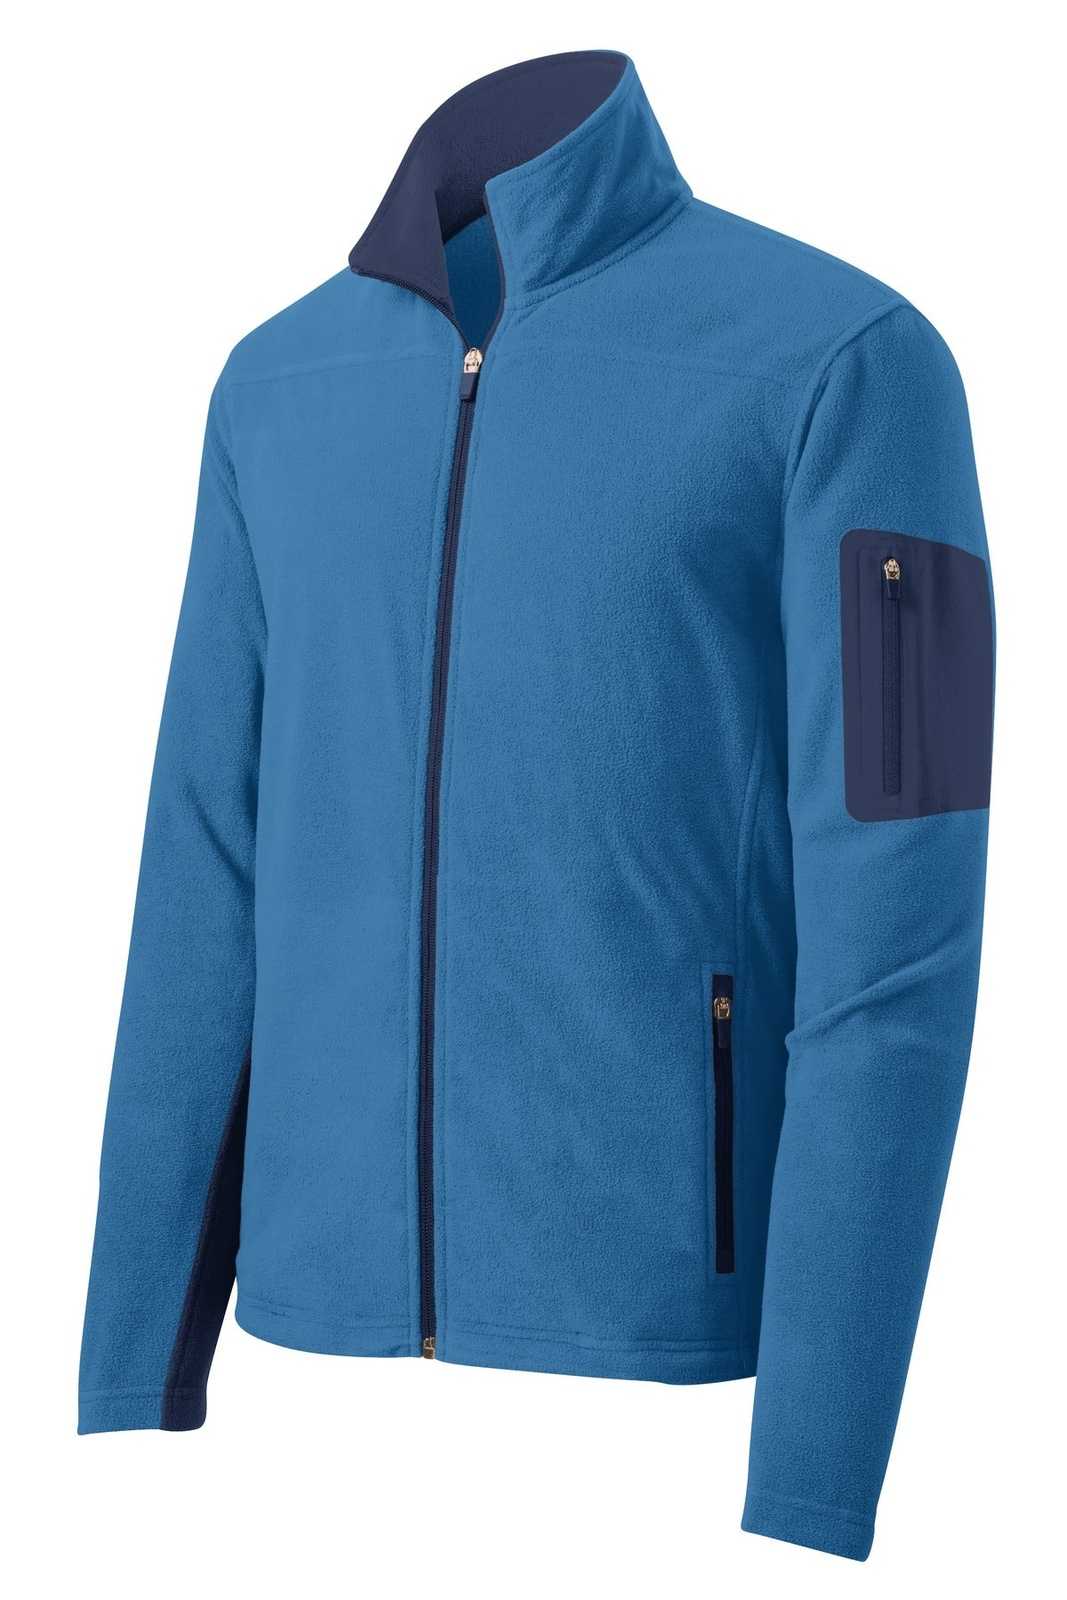 Port Authority F233 Summit Fleece Full-Zip Jacket - Regal Blue Dress Blue Navy - HIT a Double - 5